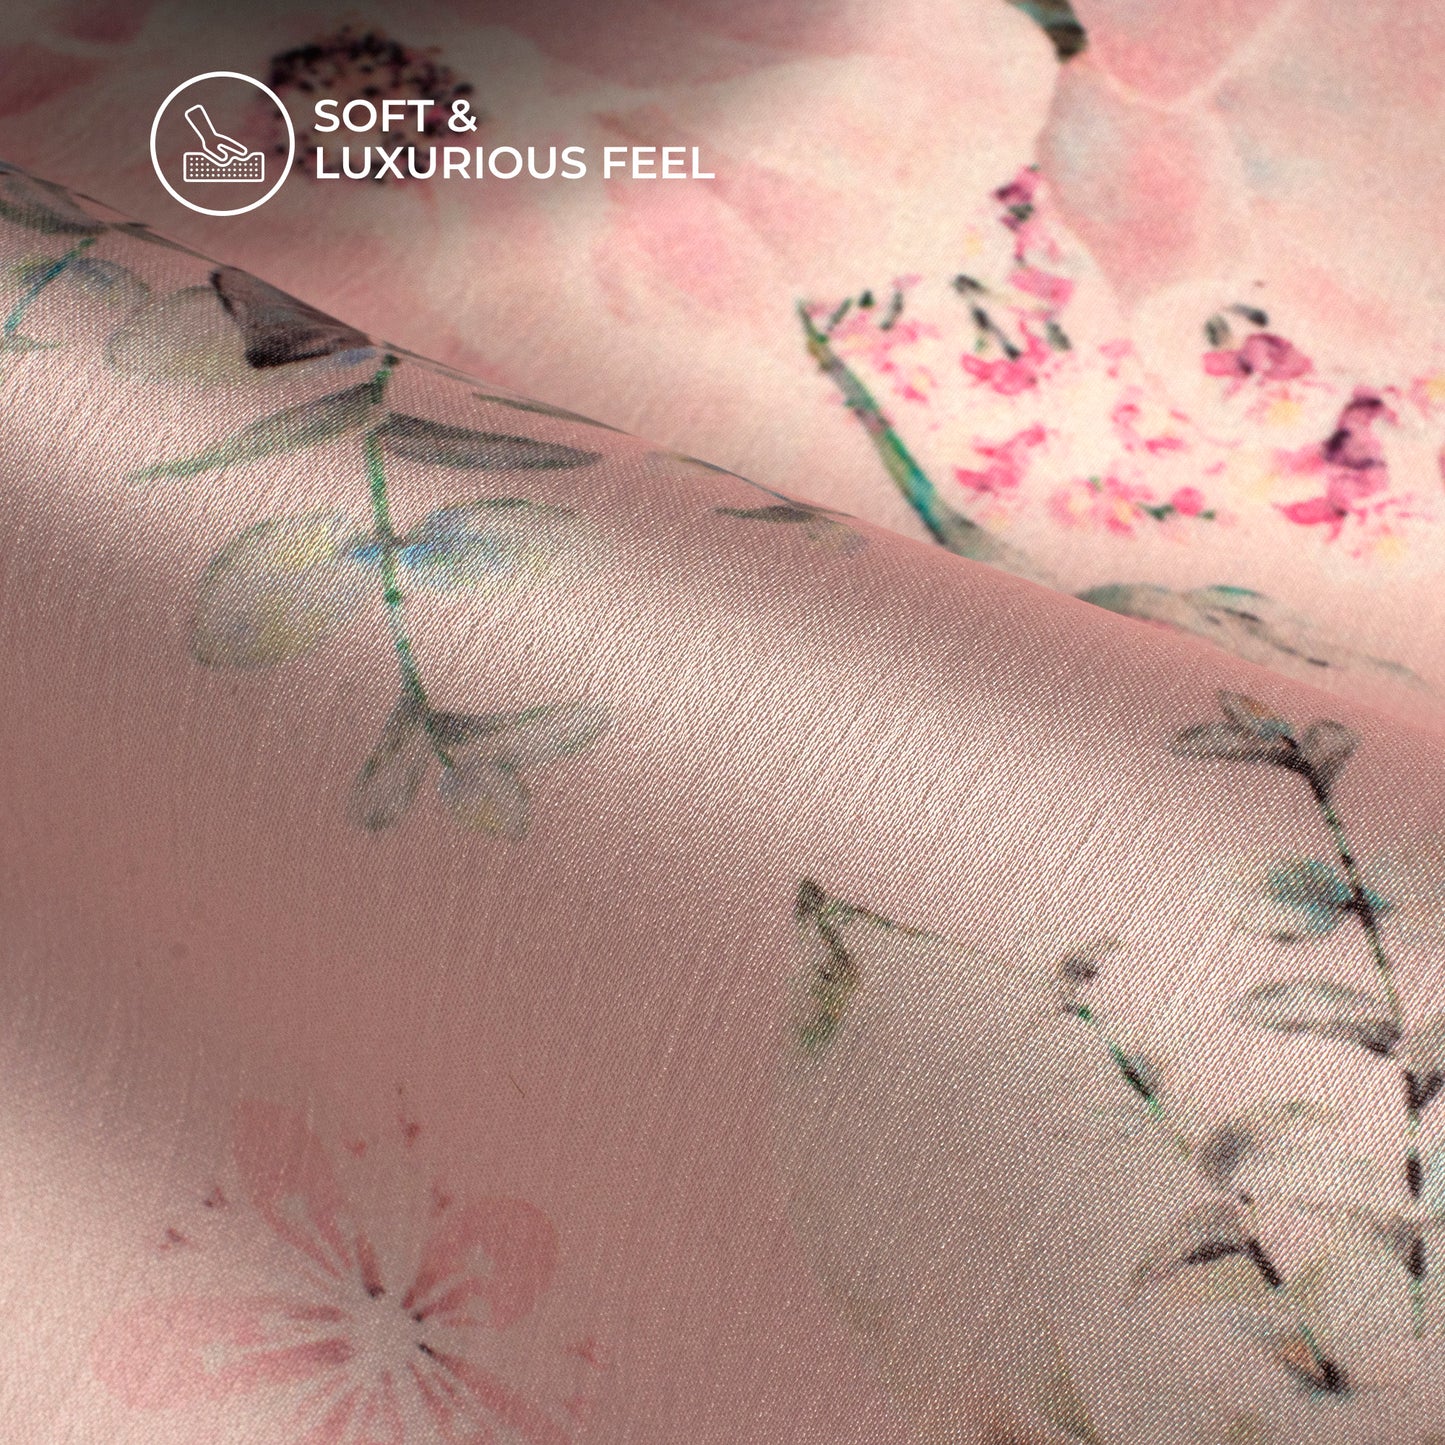 Creamy Pink Floral Digital Print Chiffon Satin Fabric